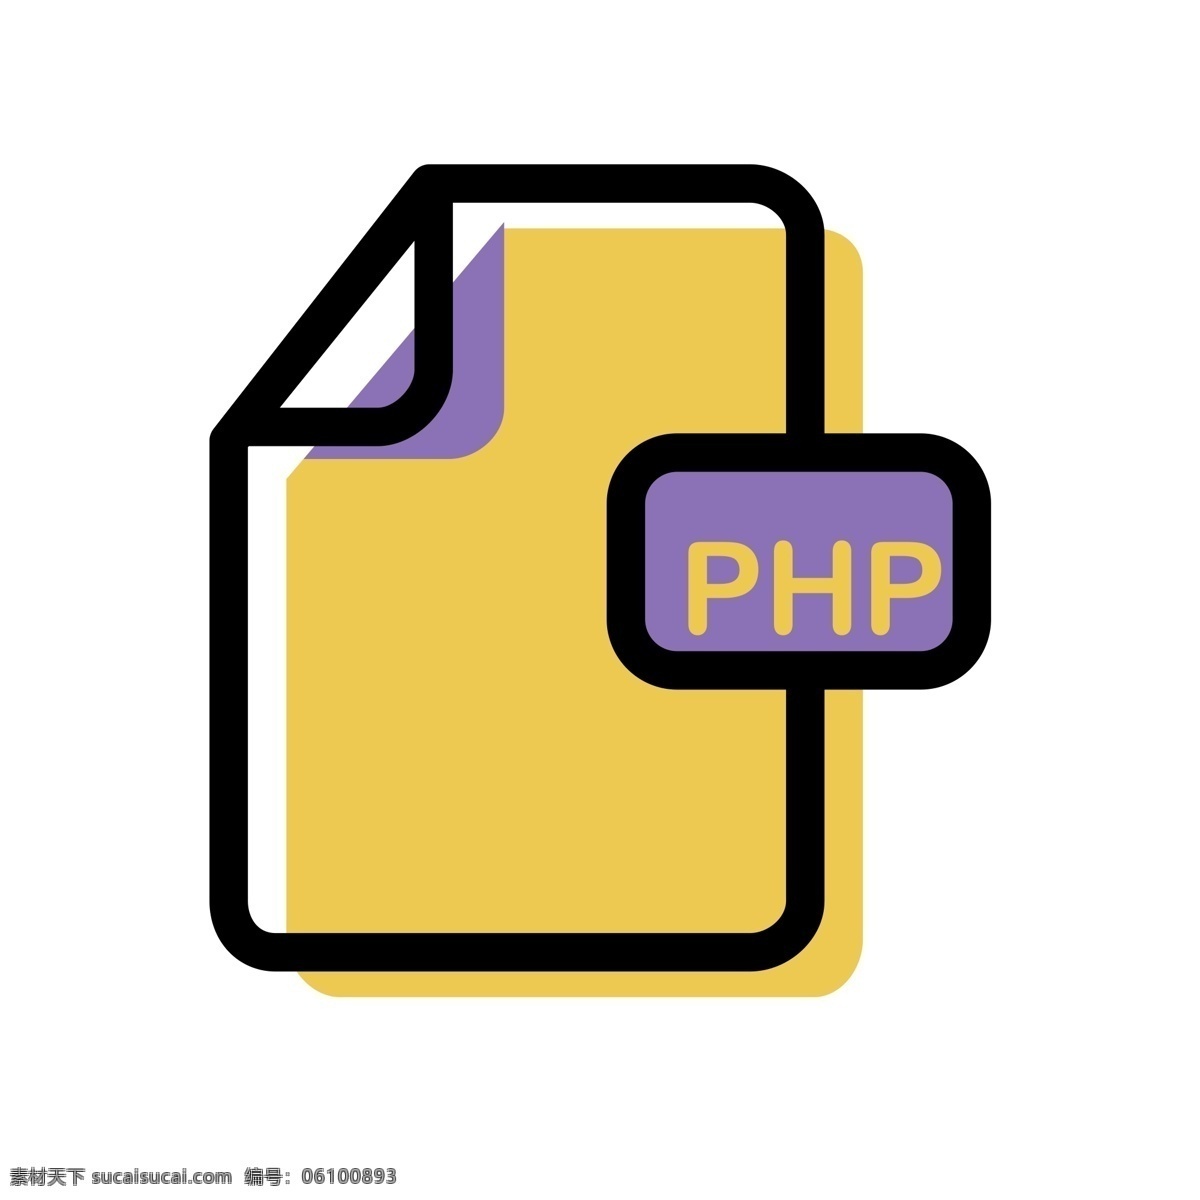 php 格式 文件 免 抠 图 php文件 格式文件 ui应用图标 电脑文件图标 软件图标 卡通图案 卡通插画 免抠图